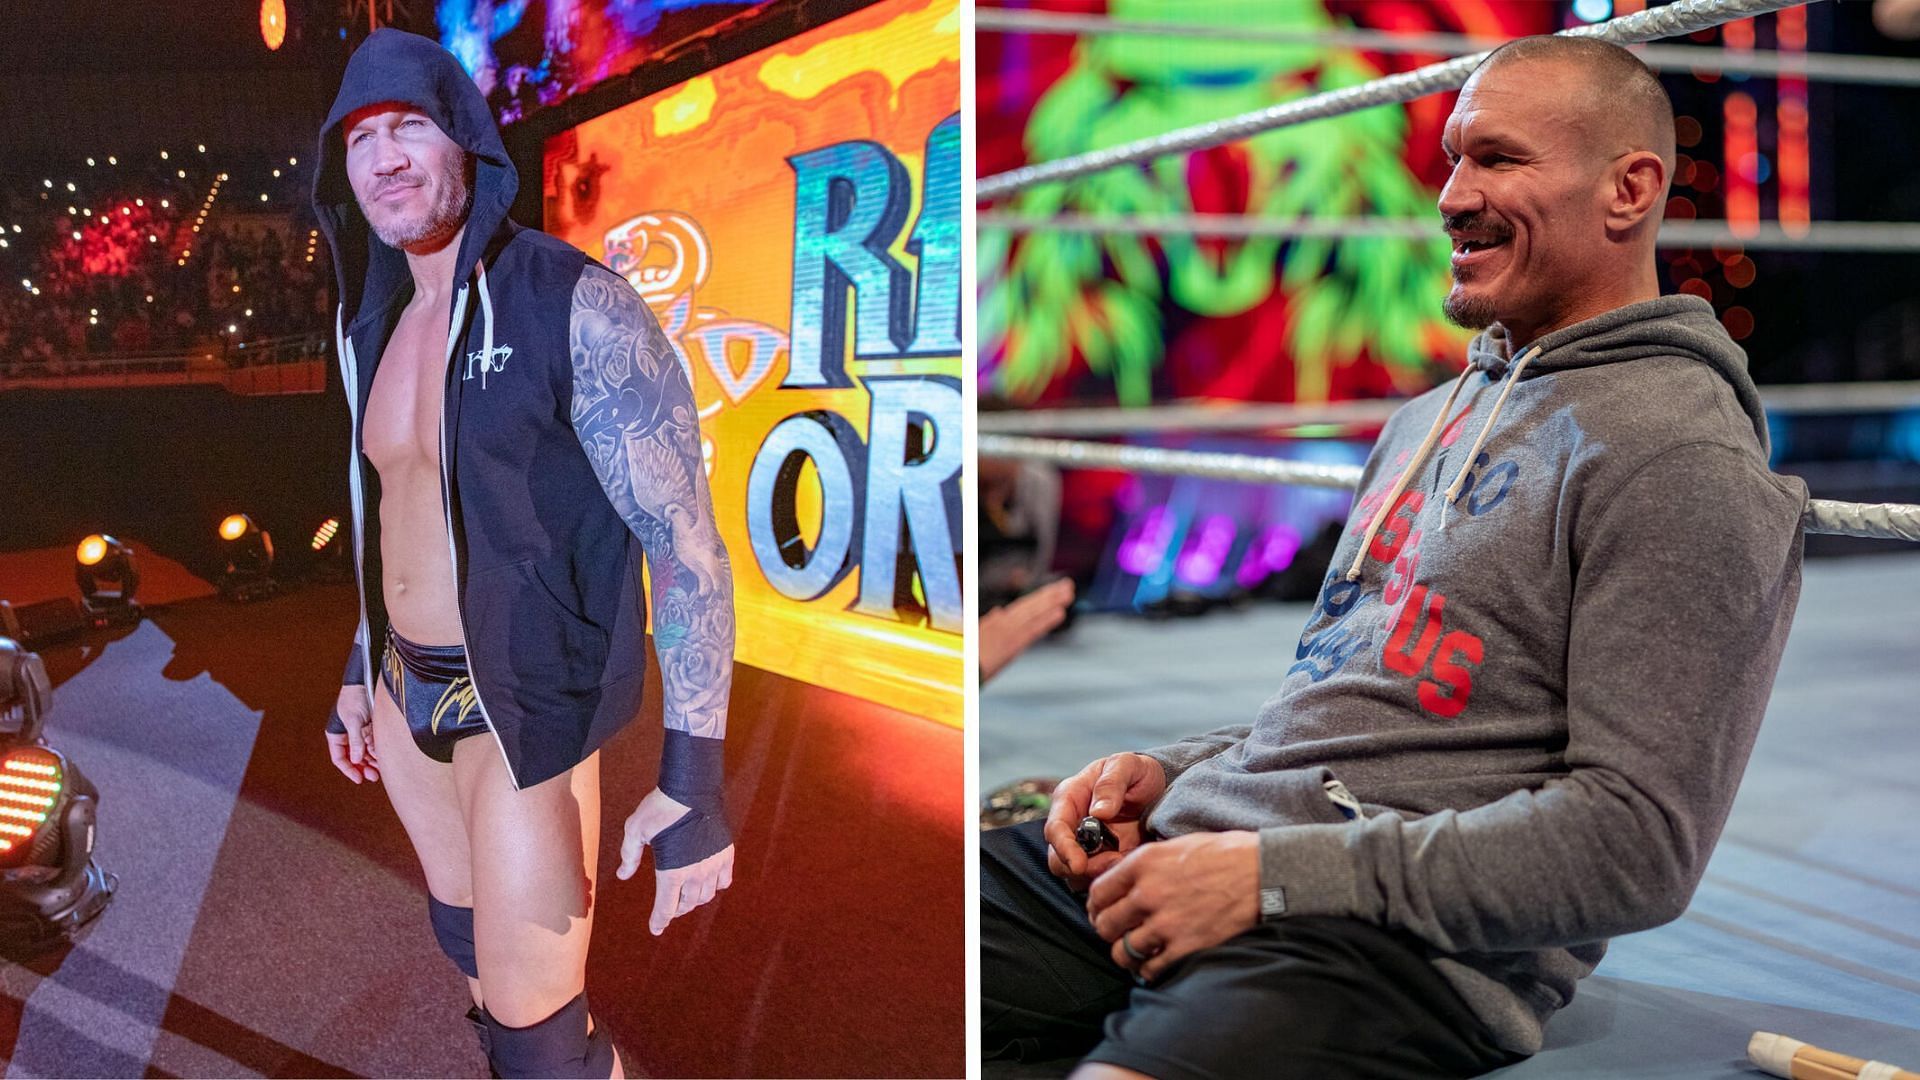 Randy Orton is a 14-time WWE World Champion